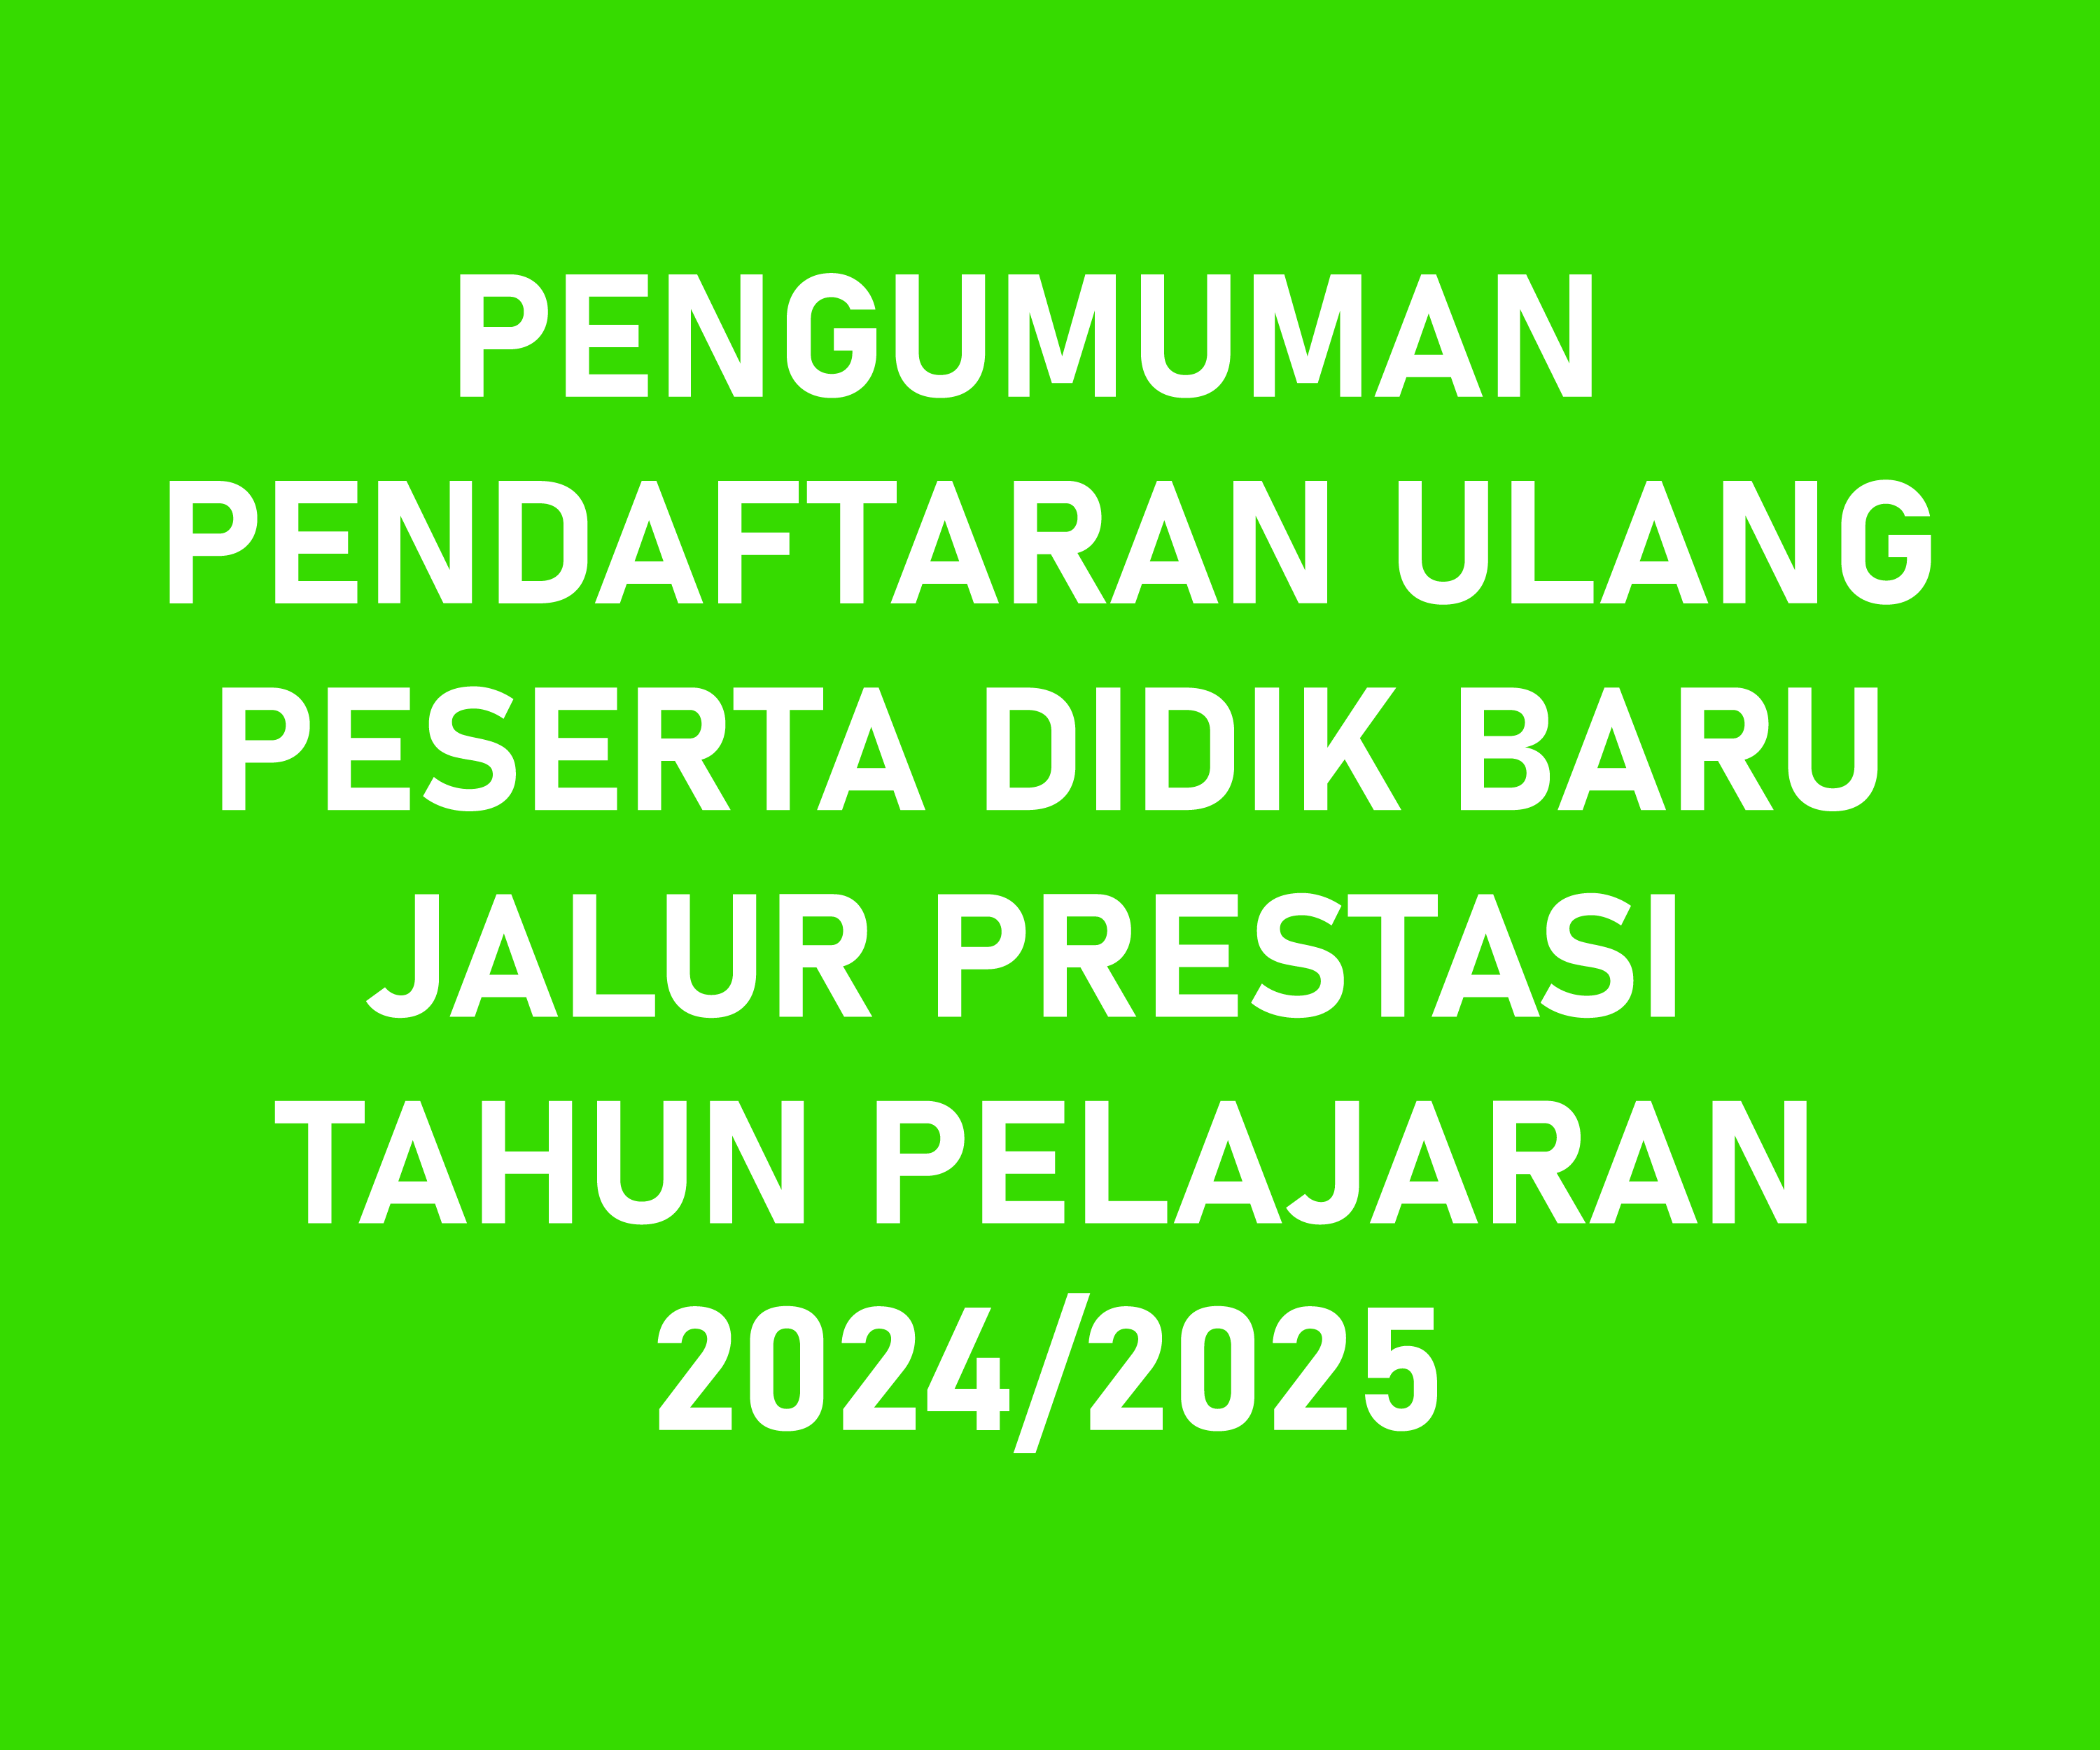 PENGUMUMAN PENDAFTARAN ULANG CALON PESERTA DIDIK BARU JALUR PRESTASI MAN 2 KOTA PAYAKUMBUH TP. 2024/2025